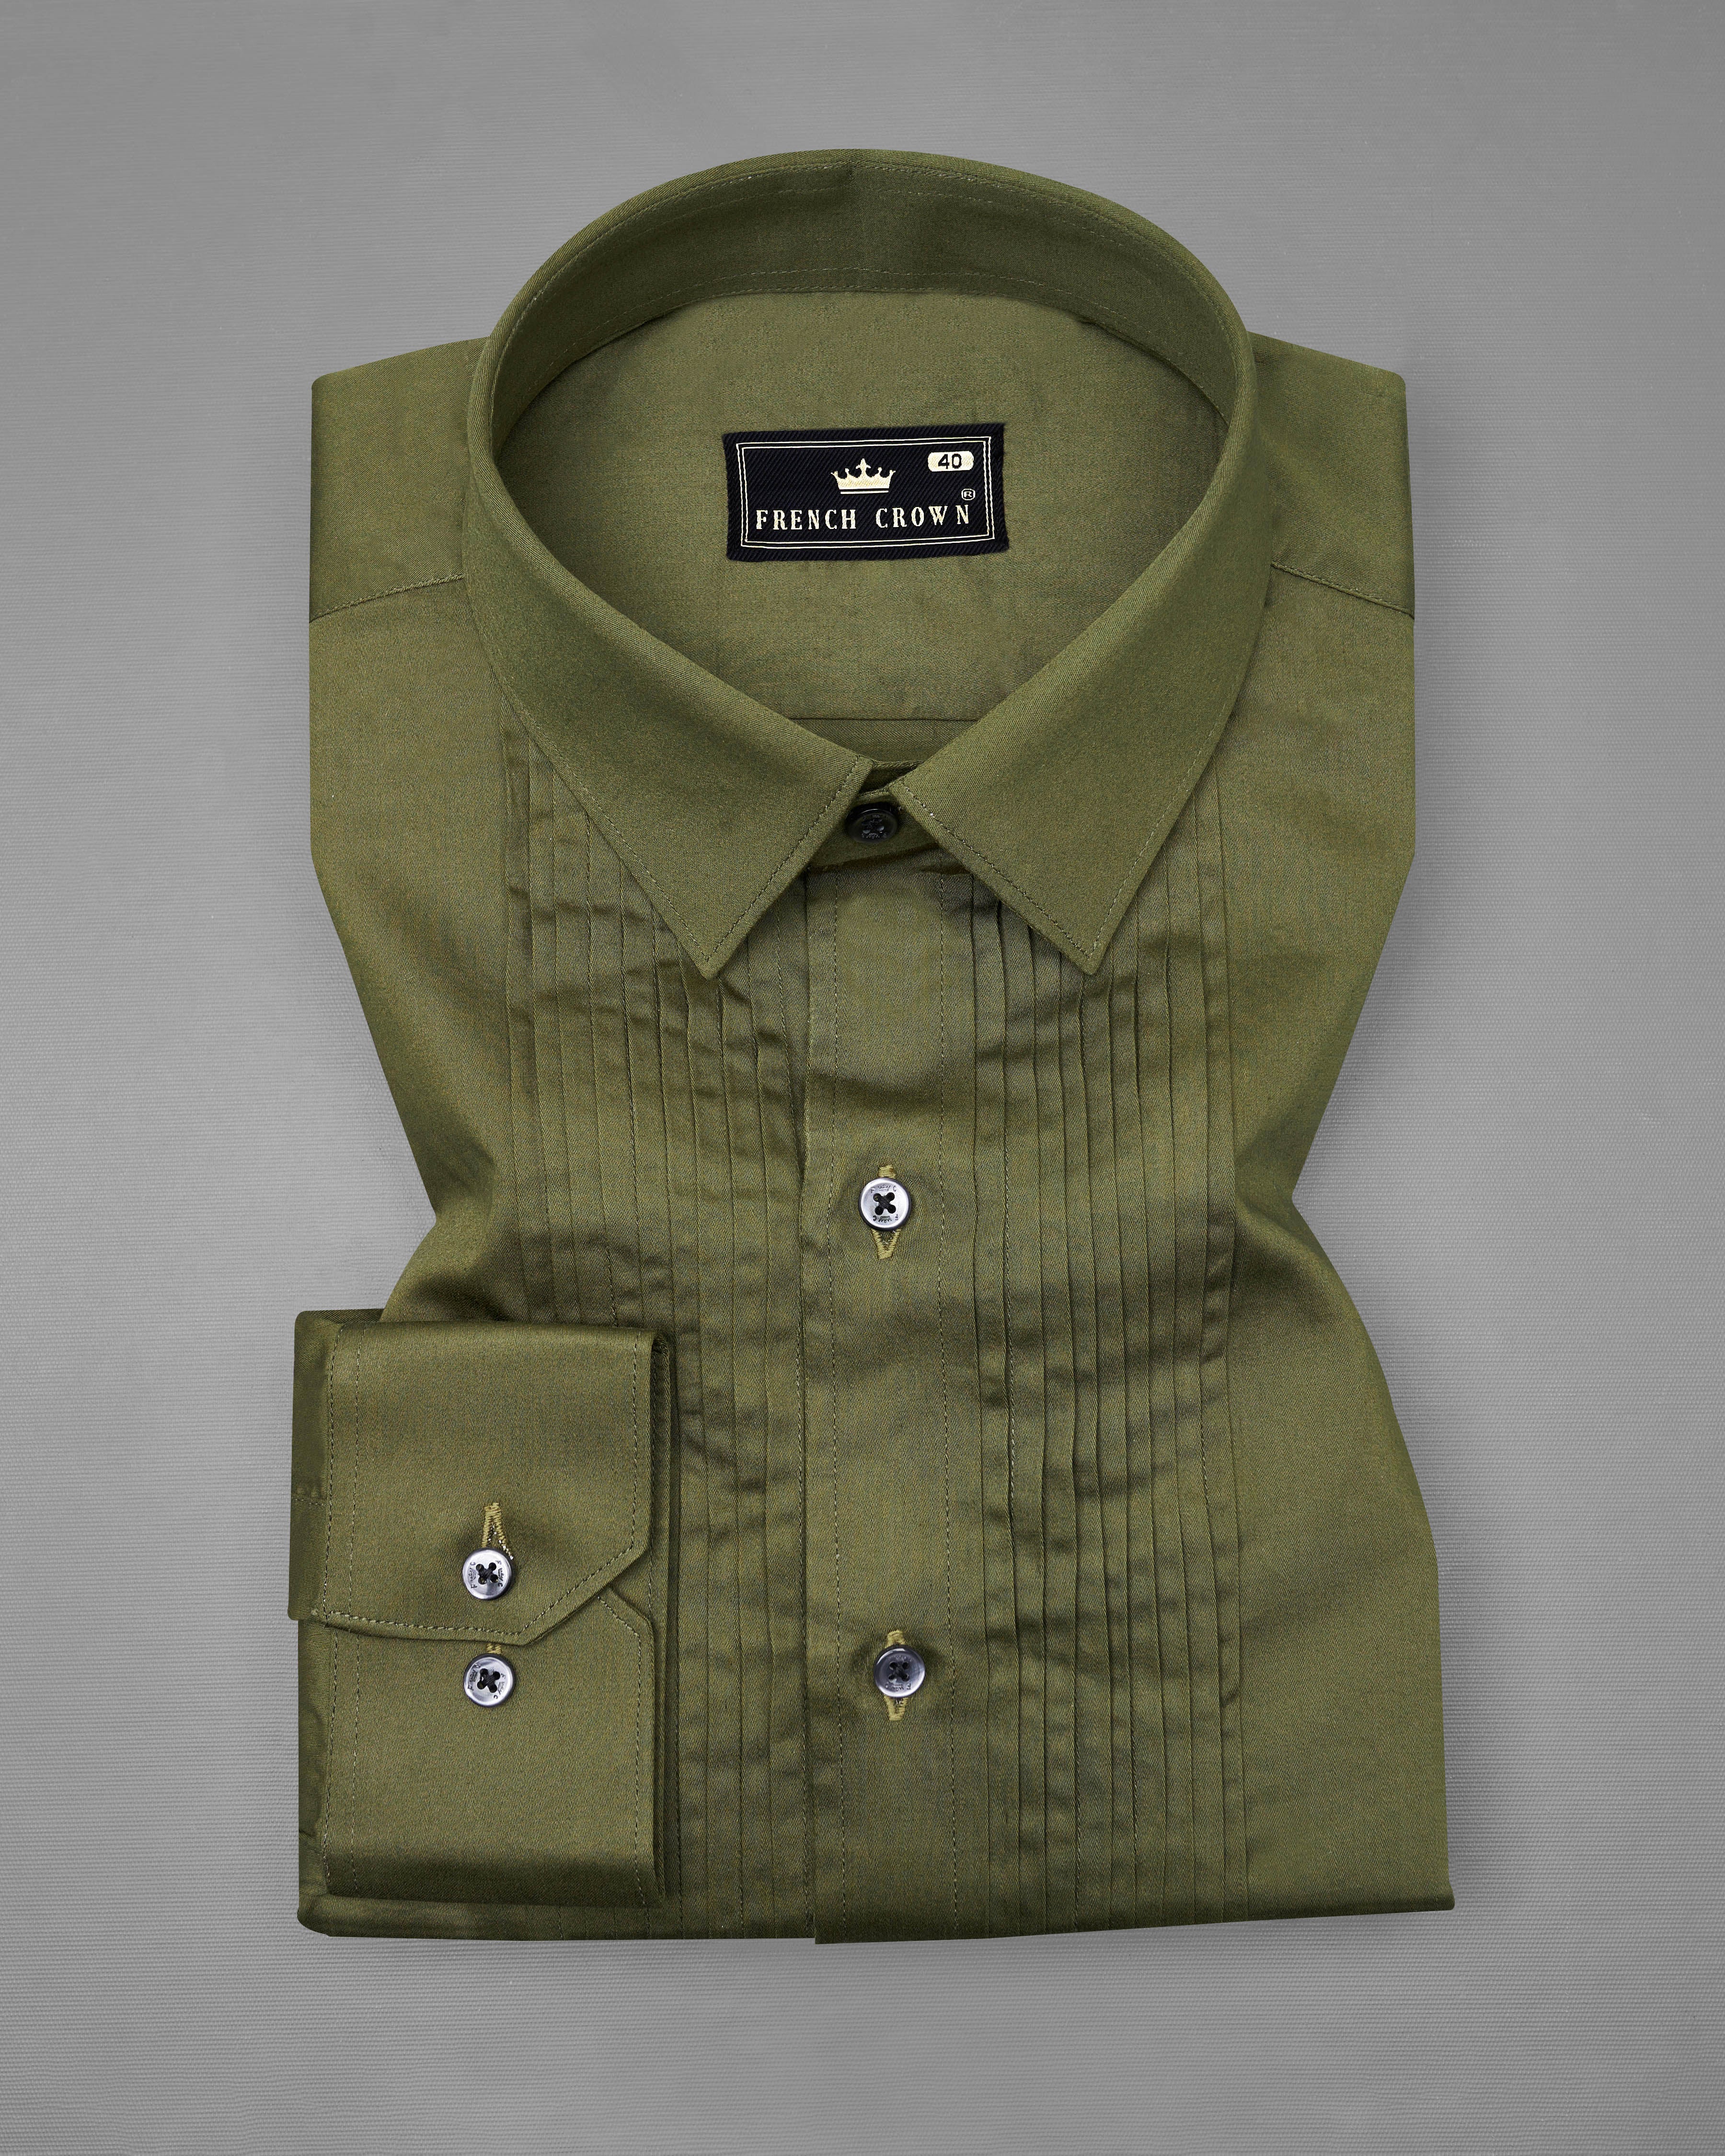 Fuscous Green Subtle Sheen Snake Pleated Super Soft Premium Cotton Tuxedo Shirt 8866-BLK-TXD-38, 8866-BLK-TXD-H-38, 8866-BLK-TXD-39, 8866-BLK-TXD-H-39, 8866-BLK-TXD-40, 8866-BLK-TXD-H-40, 8866-BLK-TXD-42, 8866-BLK-TXD-H-42, 8866-BLK-TXD-44, 8866-BLK-TXD-H-44, 8866-BLK-TXD-46, 8866-BLK-TXD-H-46, 8866-BLK-TXD-48, 8866-BLK-TXD-H-48, 8866-BLK-TXD-50, 8866-BLK-TXD-H-50, 8866-BLK-TXD-52, 8866-BLK-TXD-H-52